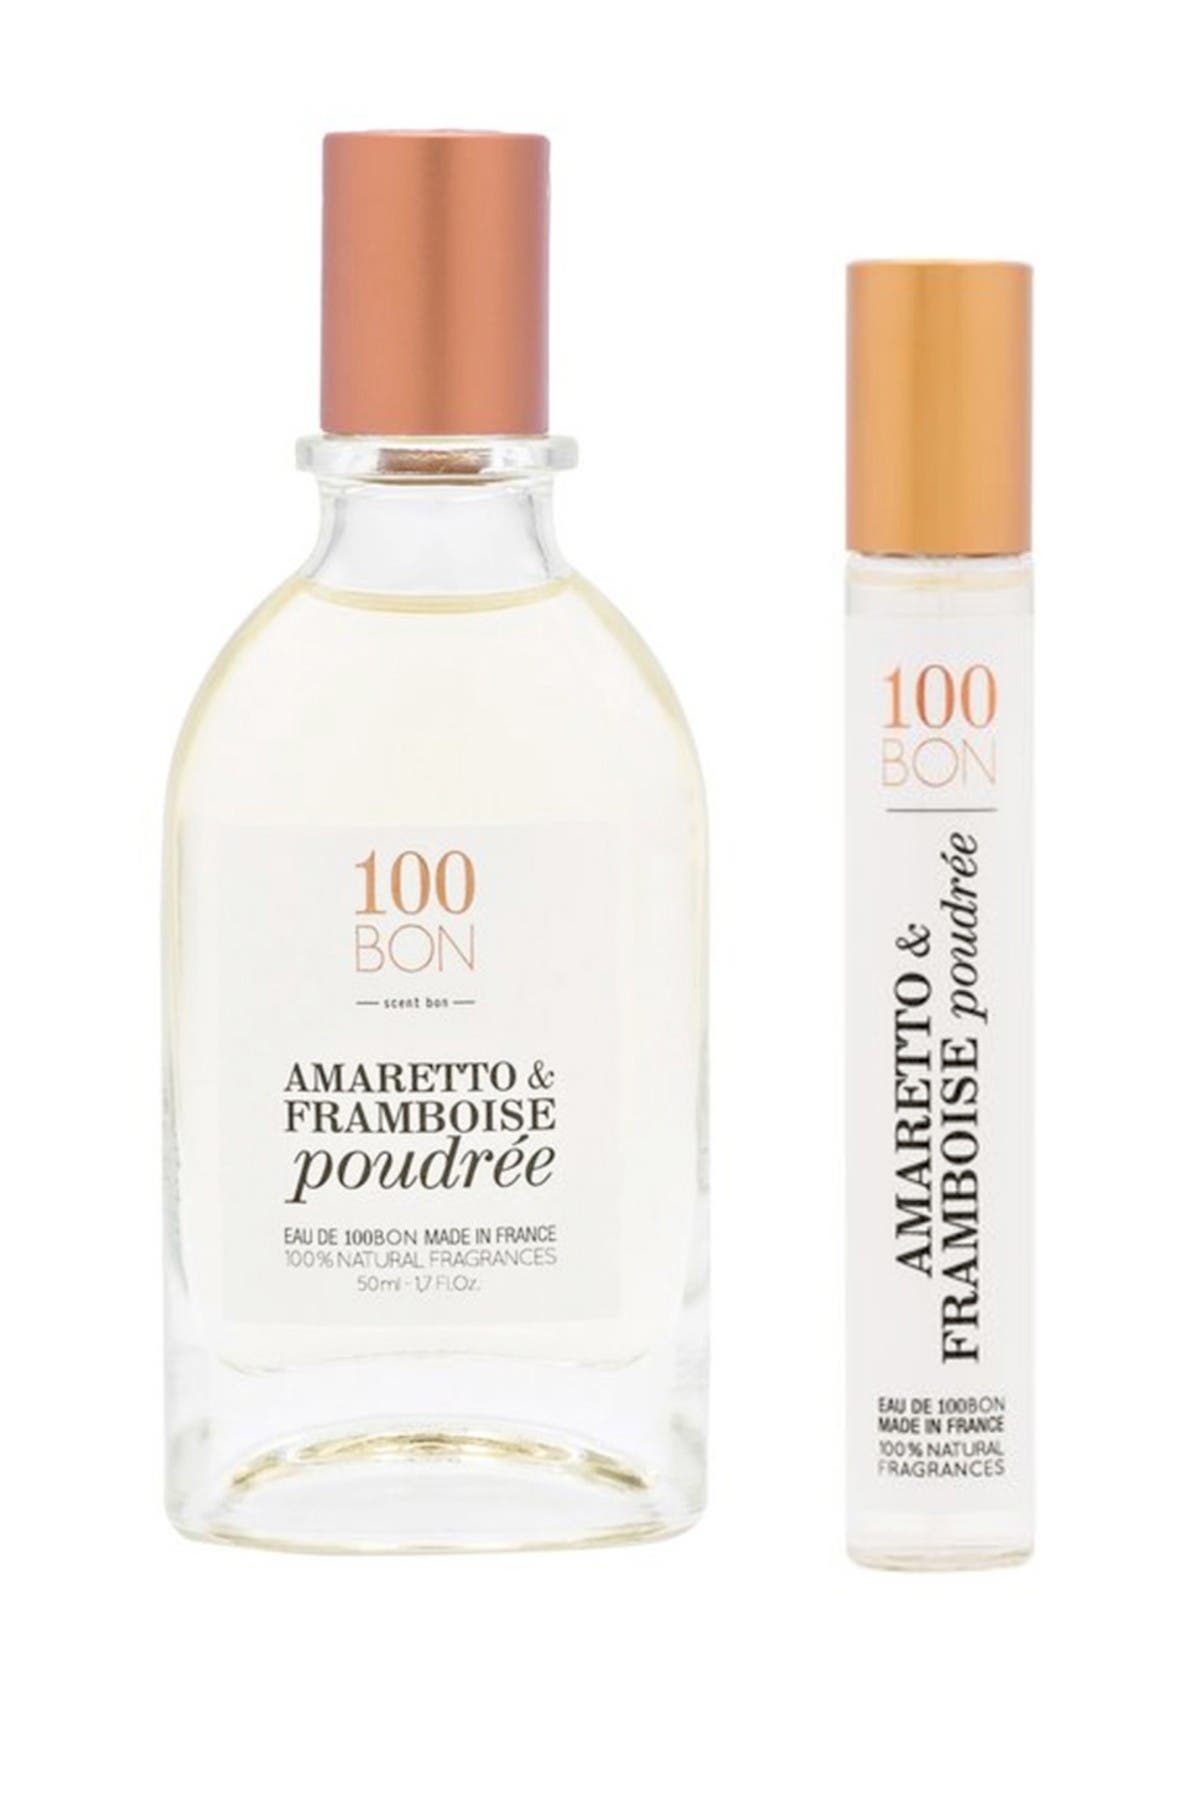 Amaretto & Framboise Poudree 2-Piece Fragrance Set 100BON